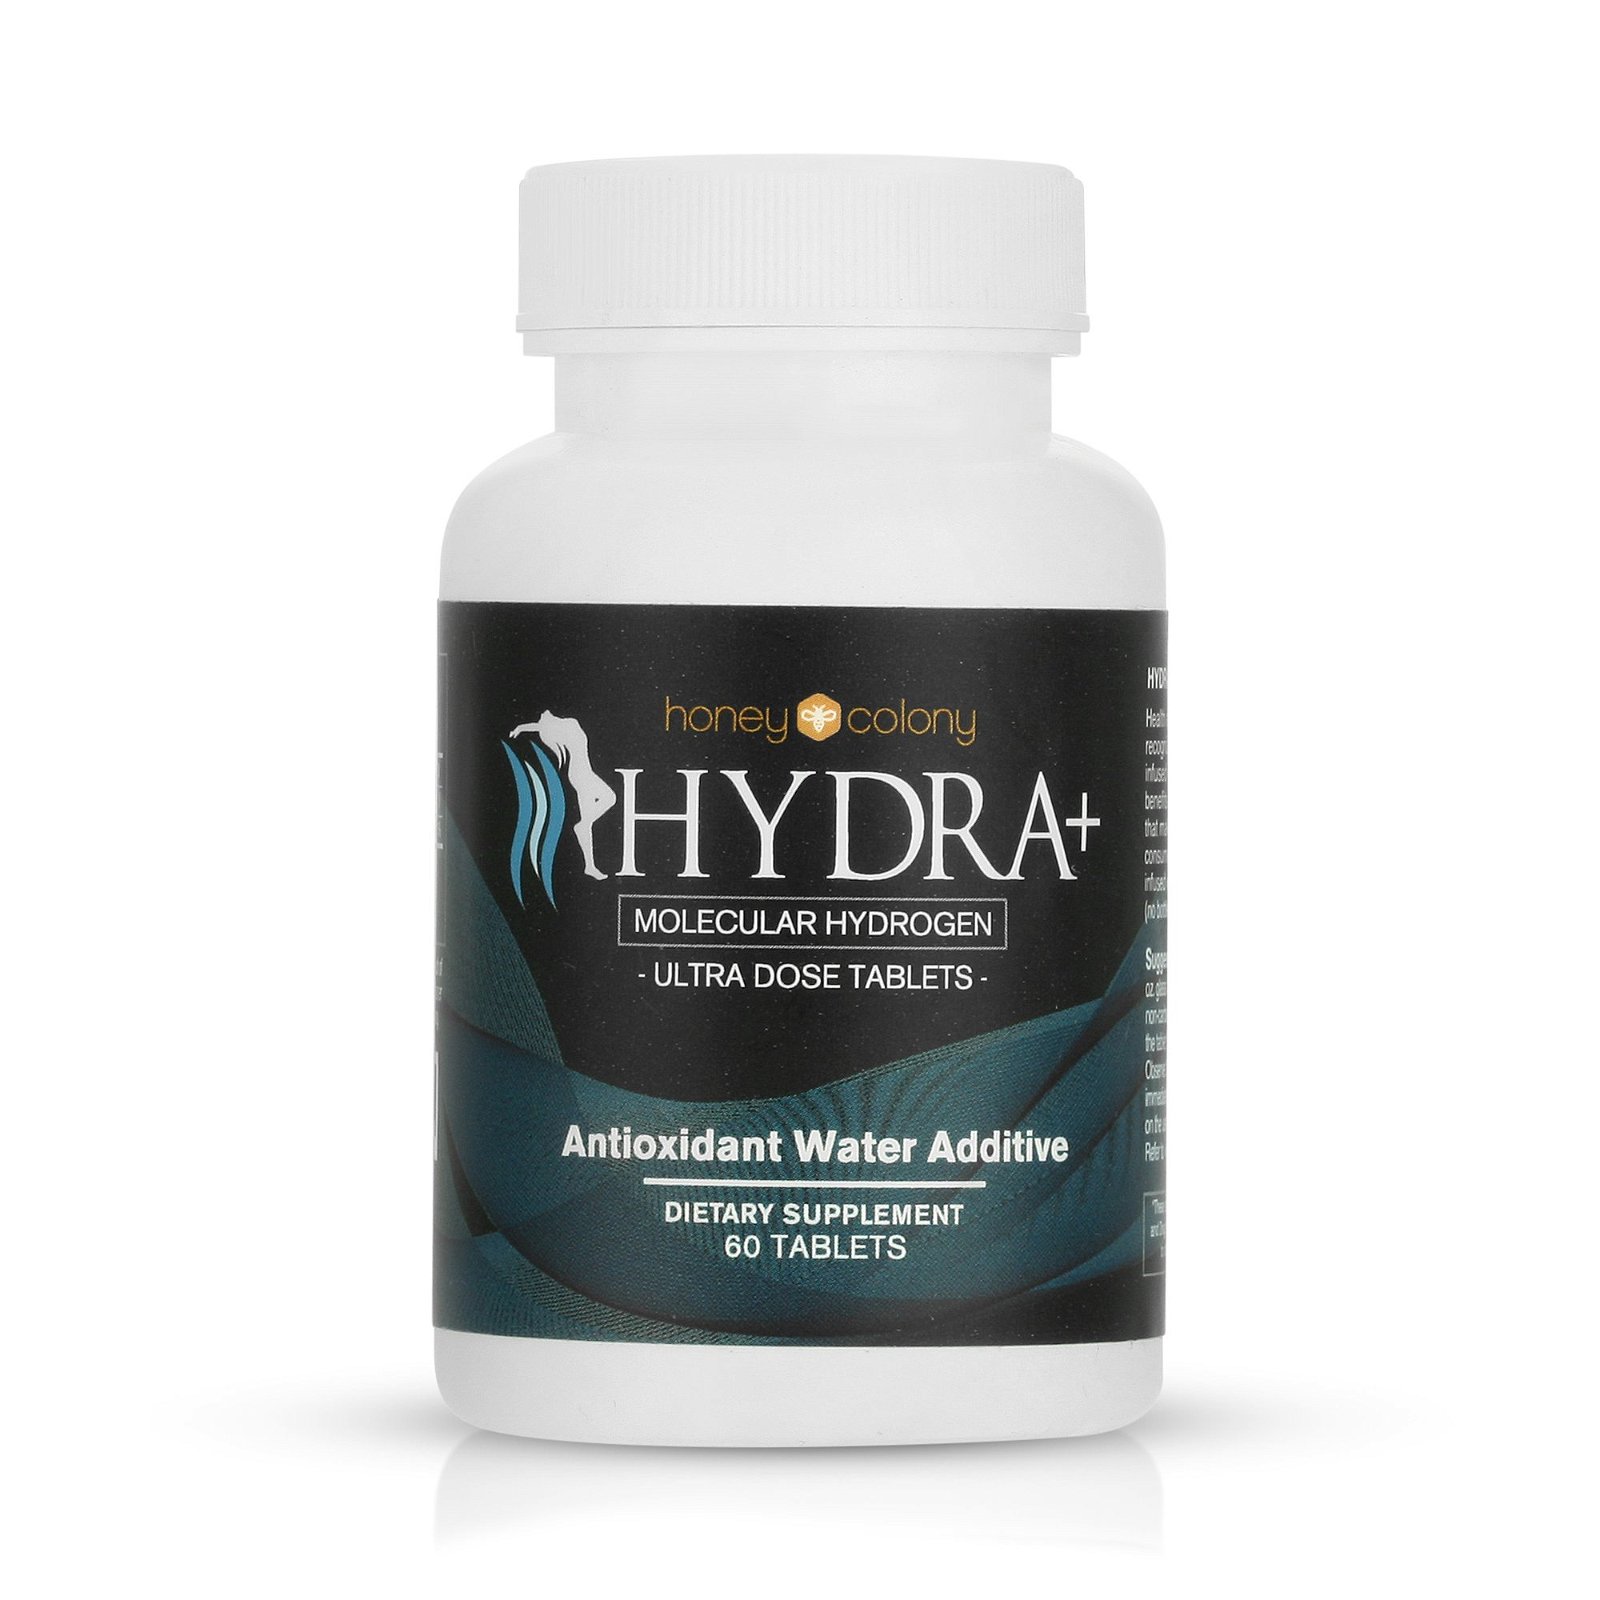 Image of Hydra+ Molecular Hydrogen Ultra Dose - Single